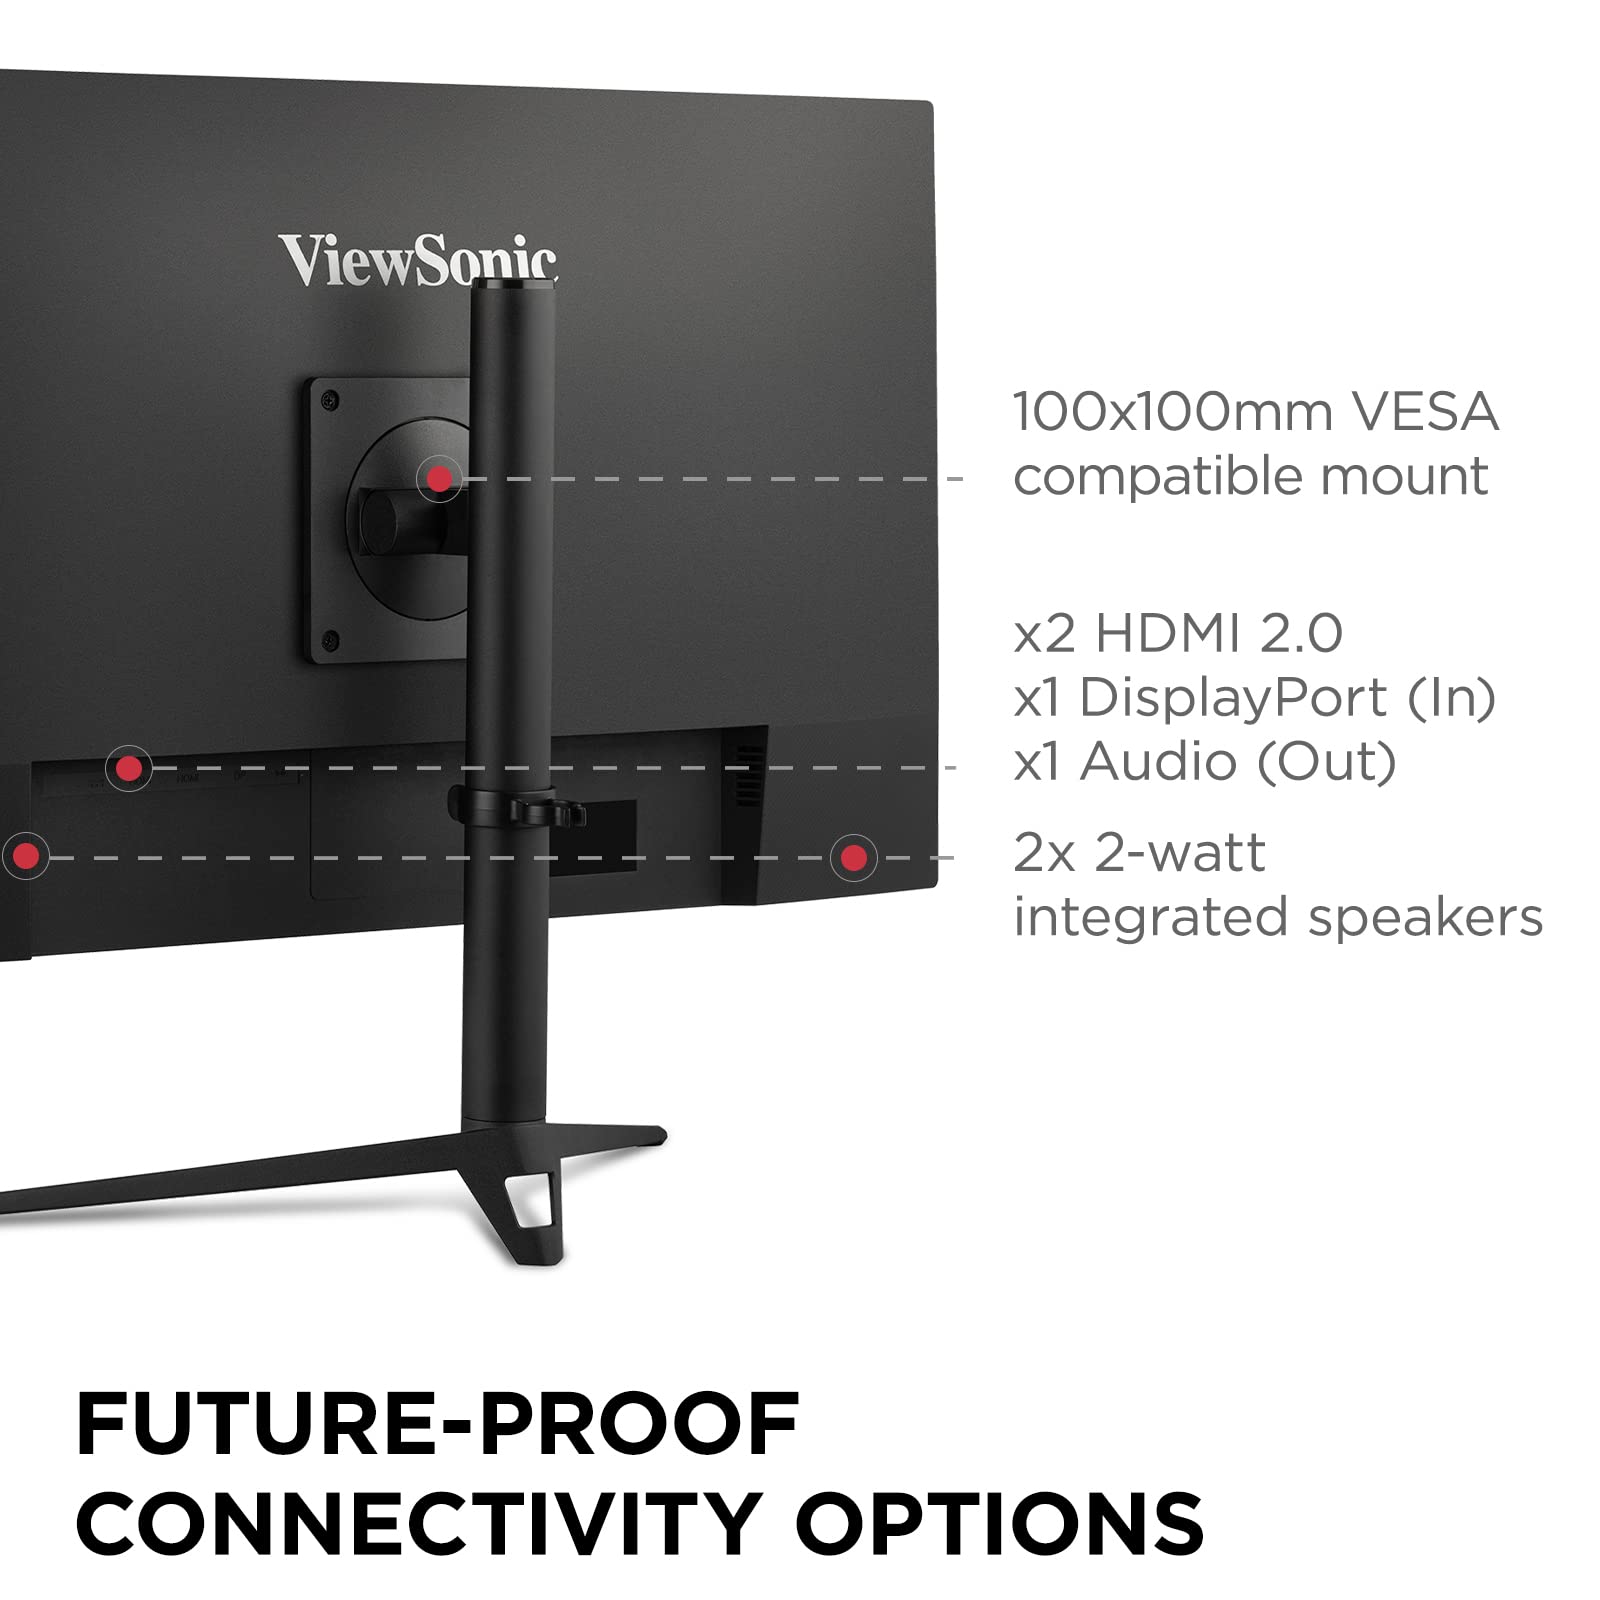 ViewSonic Omni VX2728J-2K 27 Inch Gaming Monitor 1440p 165hz 0.5ms IPS w/FreeSync Premium, Advanced Ergonomics, HDMI, DisplayPort, Black